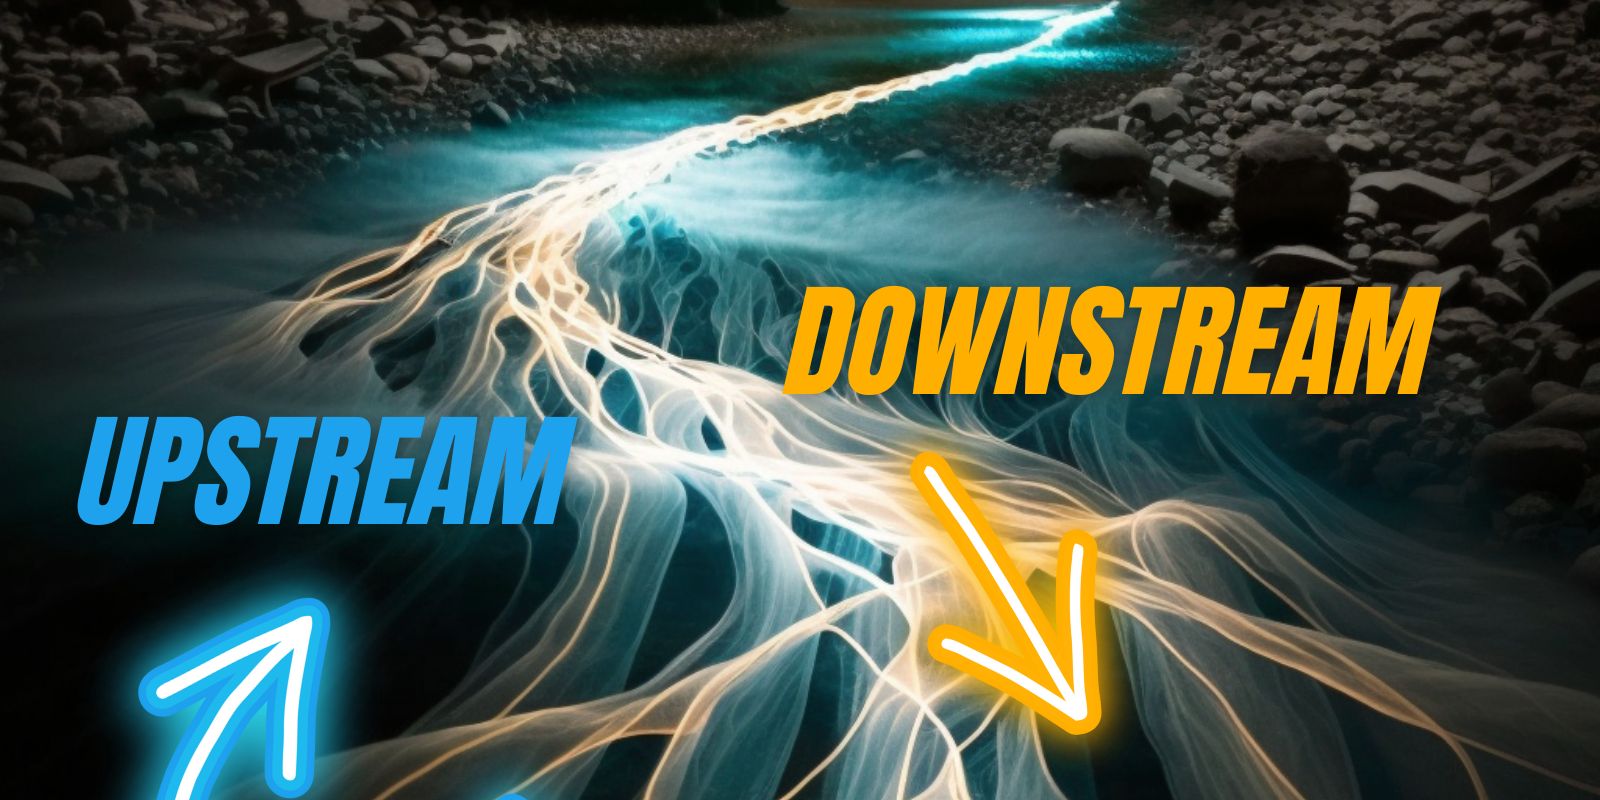 Upstream vs. Downstream ADSL